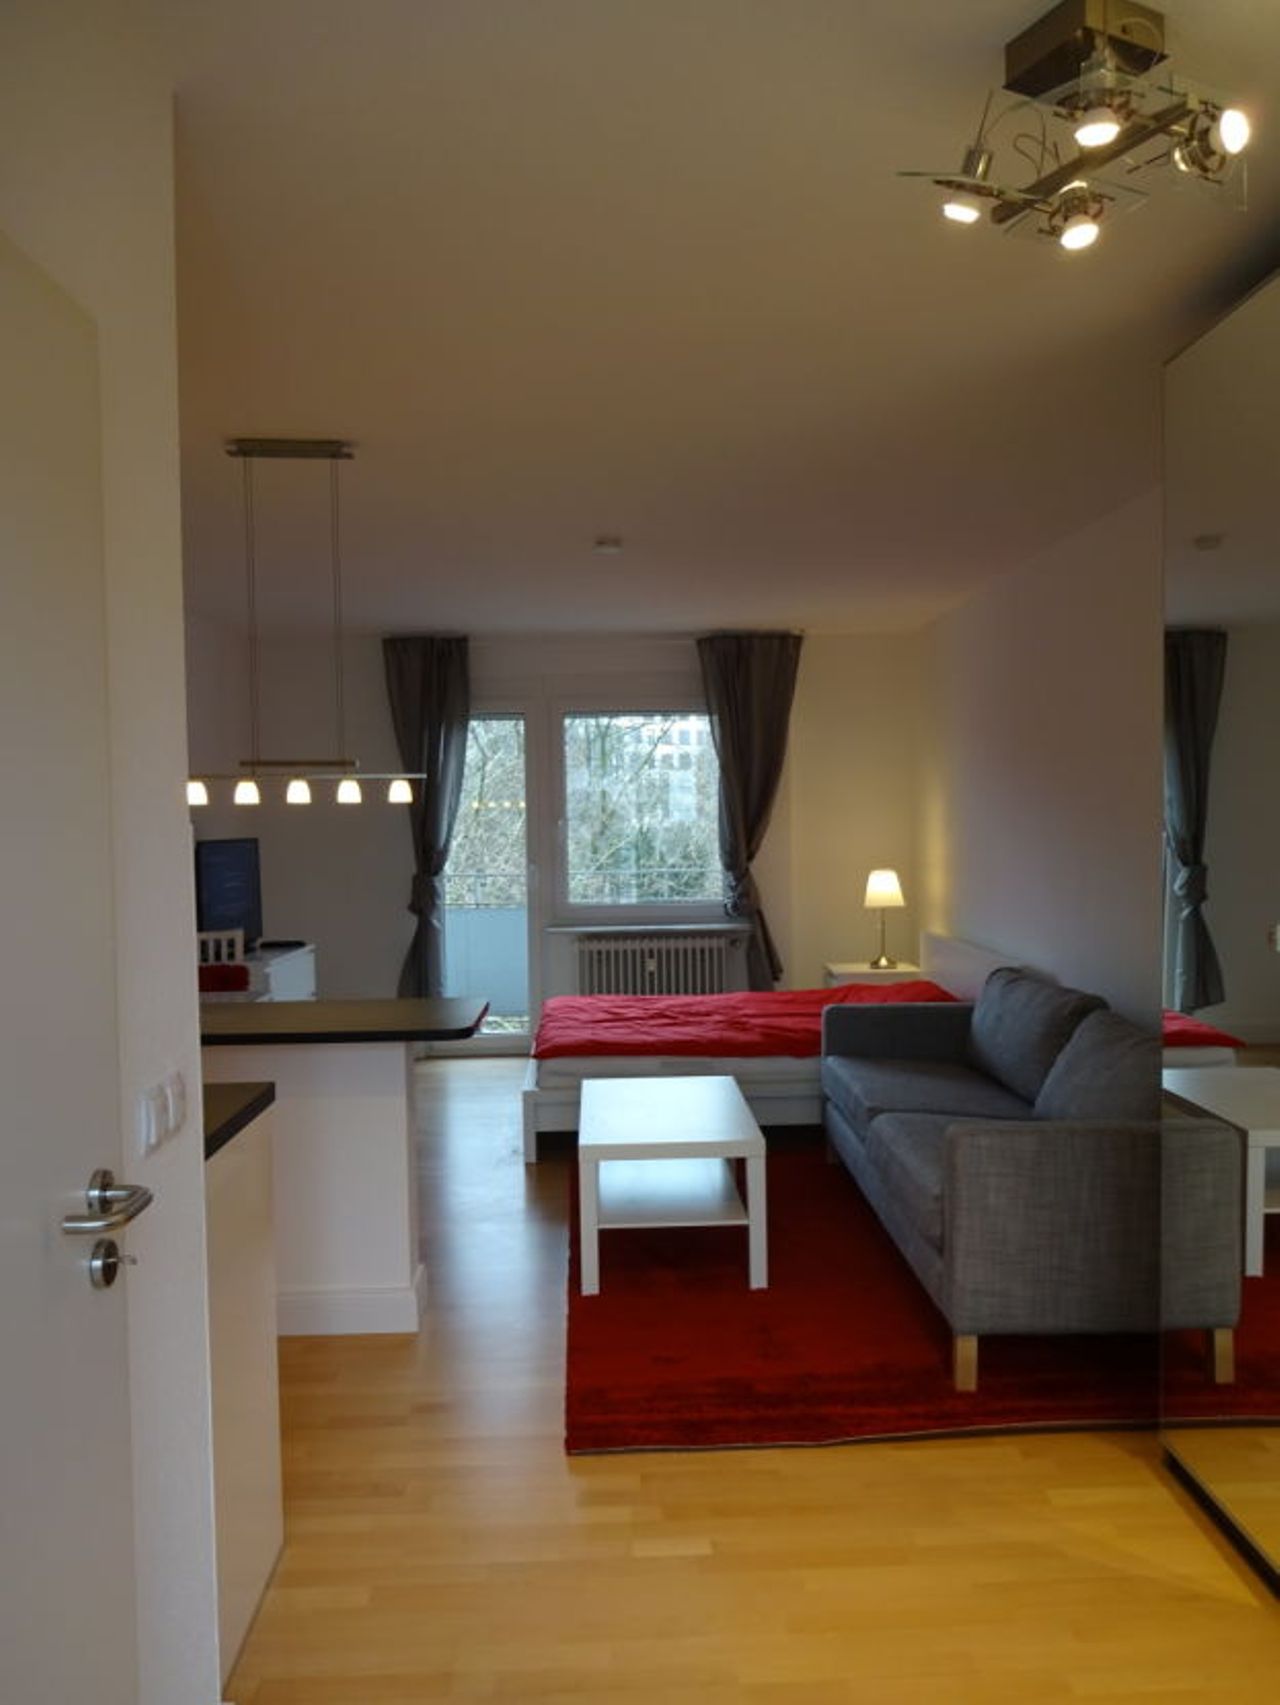 Top furnished 1 ZKB apartment with winter garden balcony - 5 min walking distance to Konstablerwache / Zeil in Frankfurt am Main